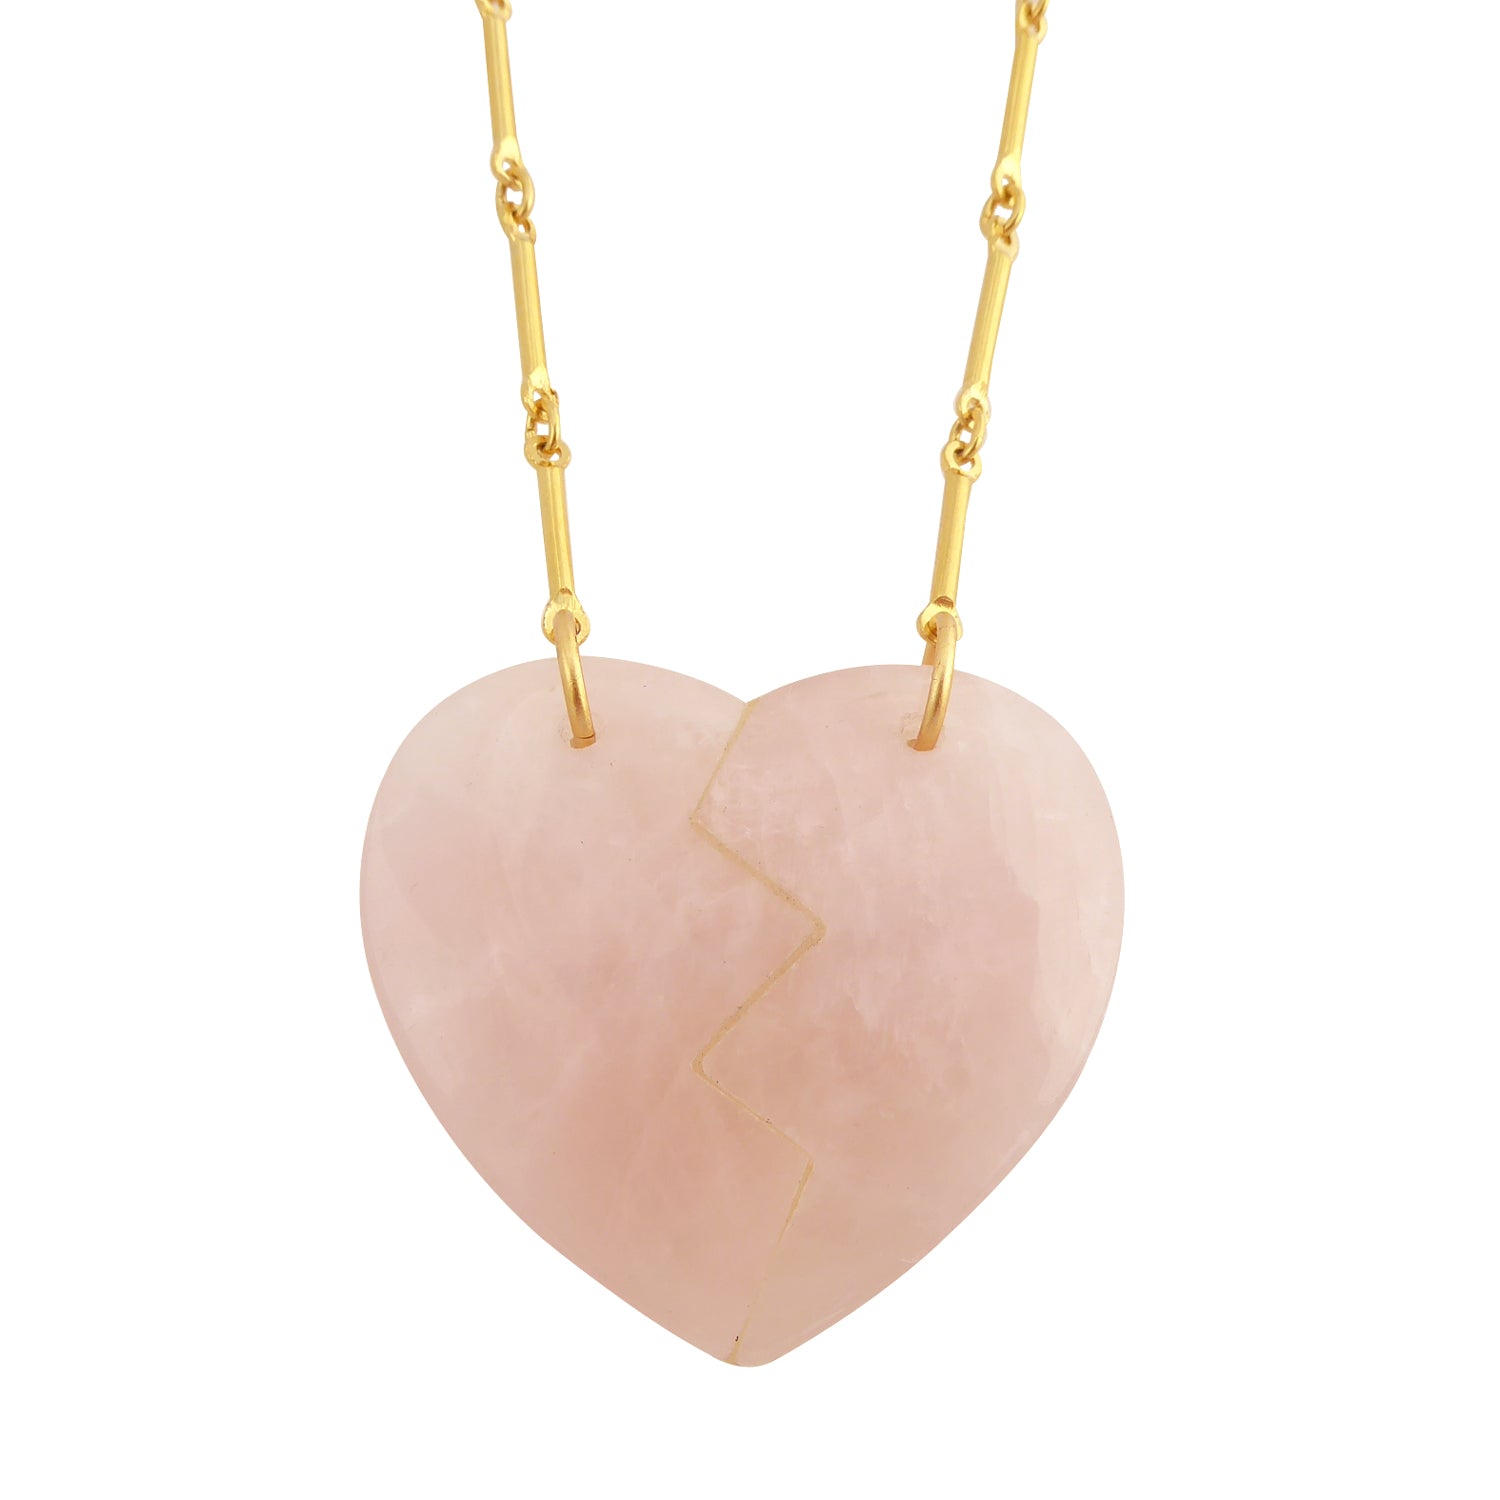 Rose quartz heartbreak pendant necklace by Jenny Dayco1